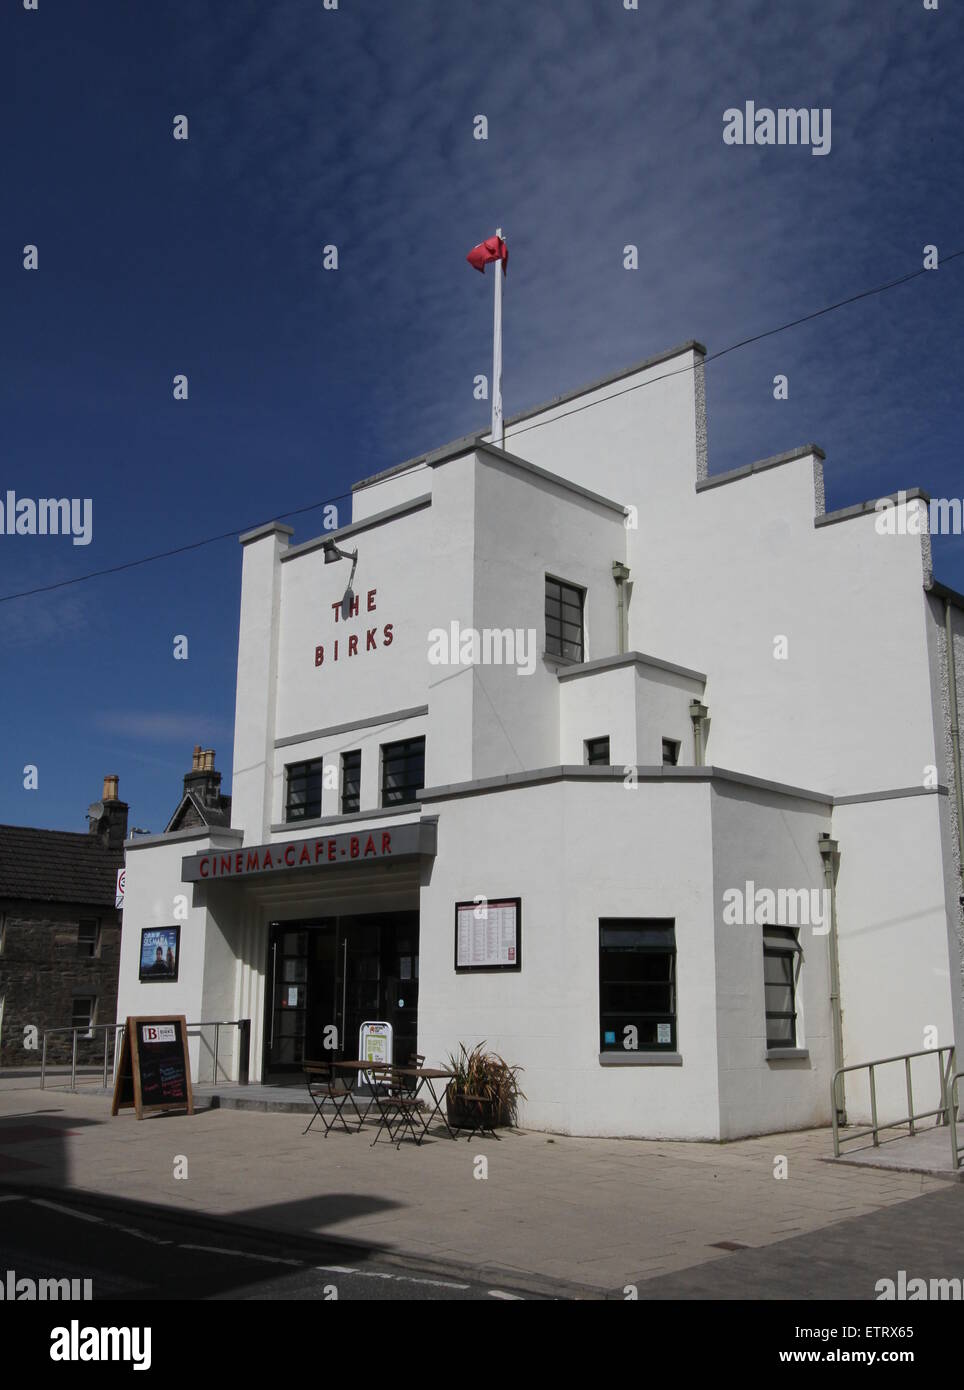 Exterior of The Birks Cinema Cafe Bar Aberfeldy Scotland  June 2015 Stock Photo